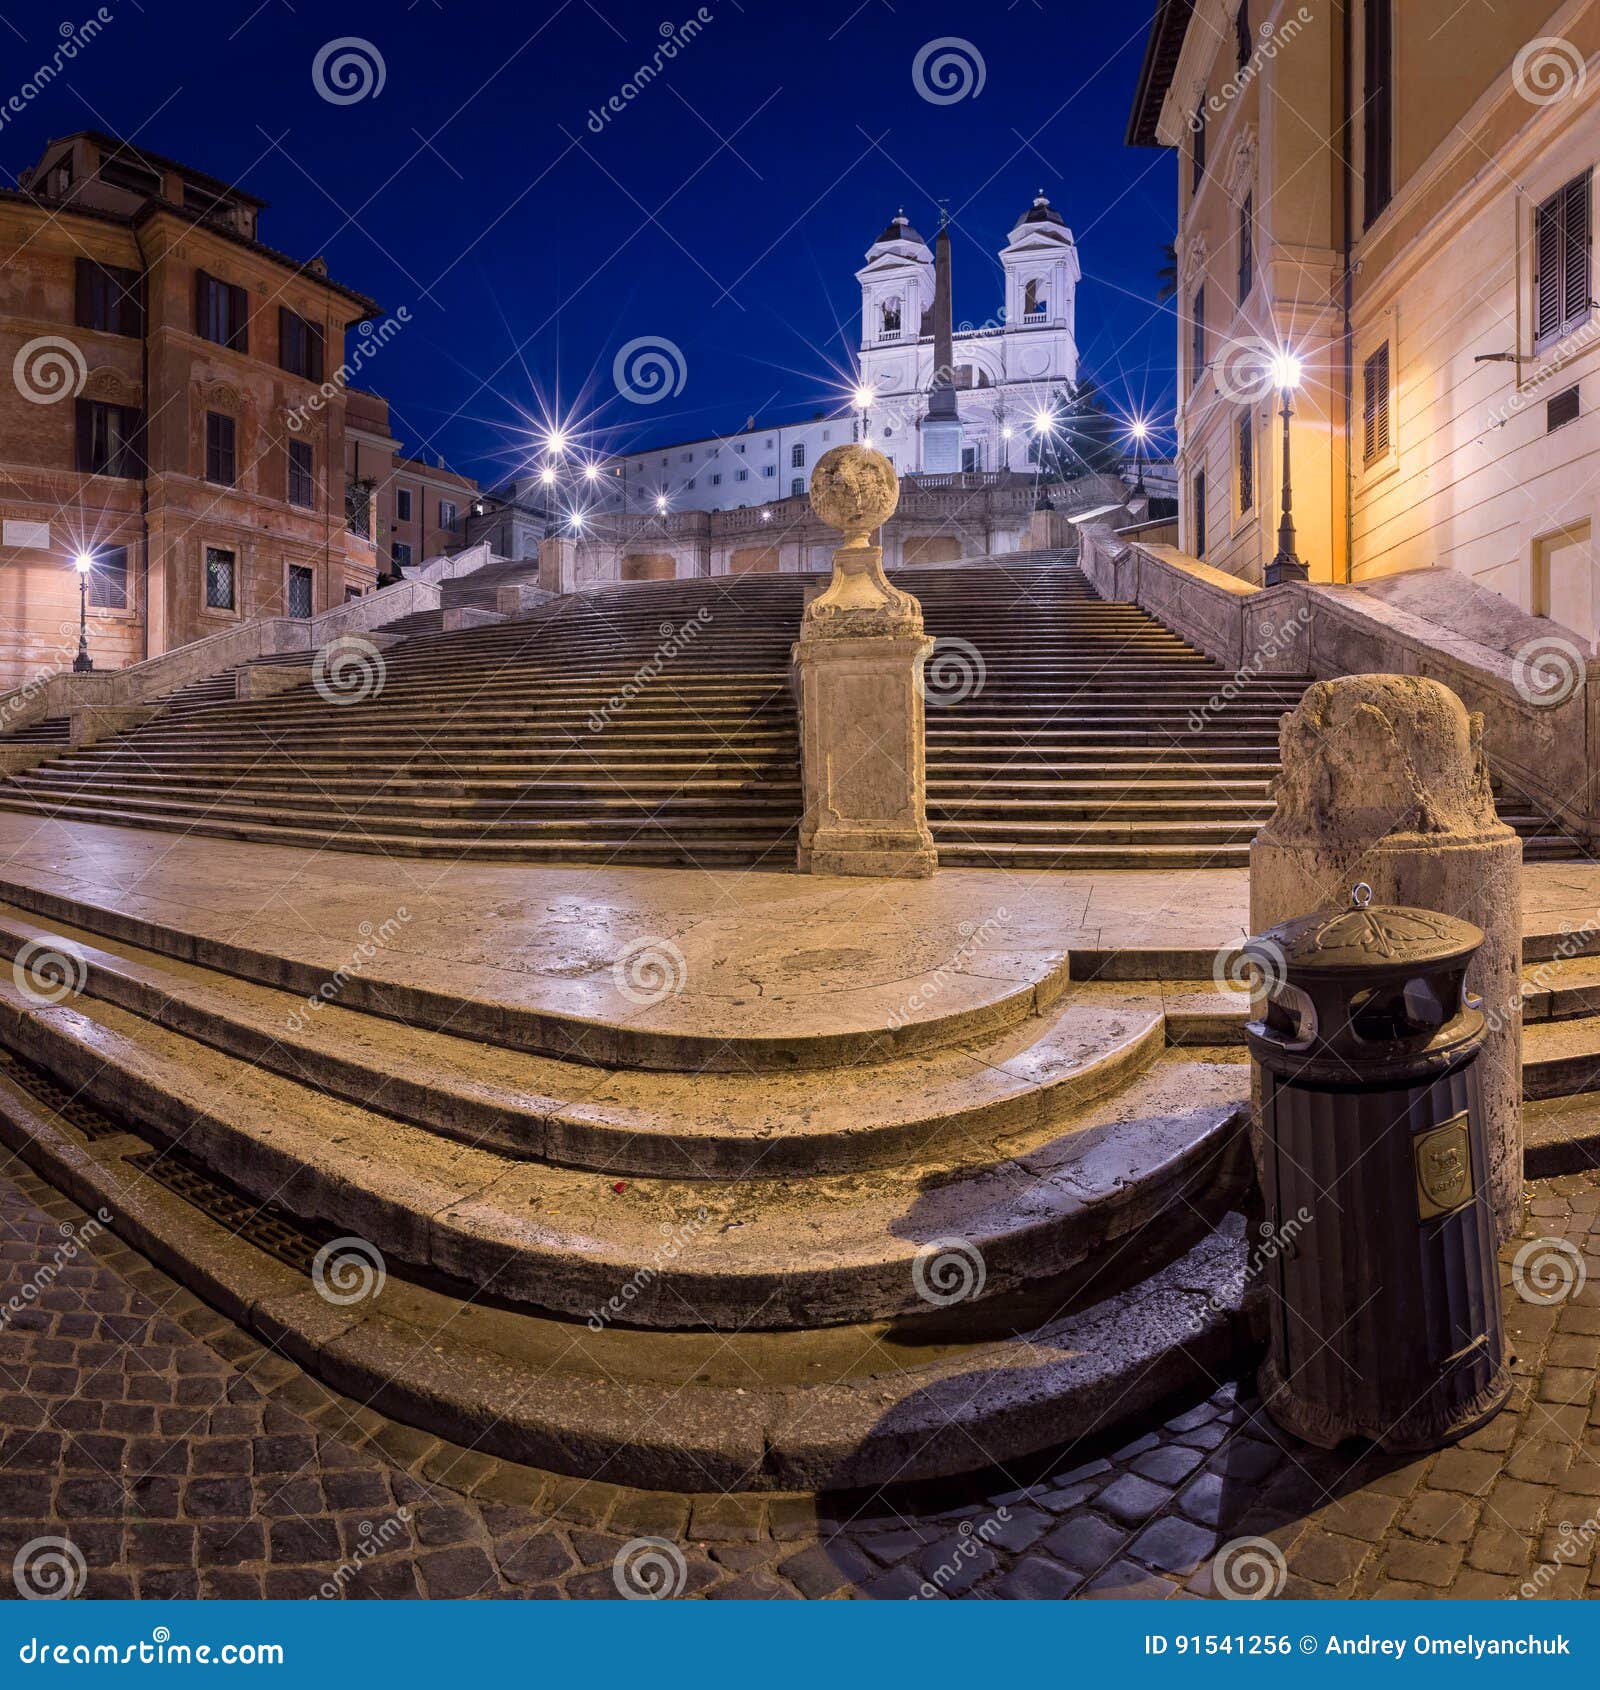 spanish steps and trinita del monti church in the morning, rome, italy